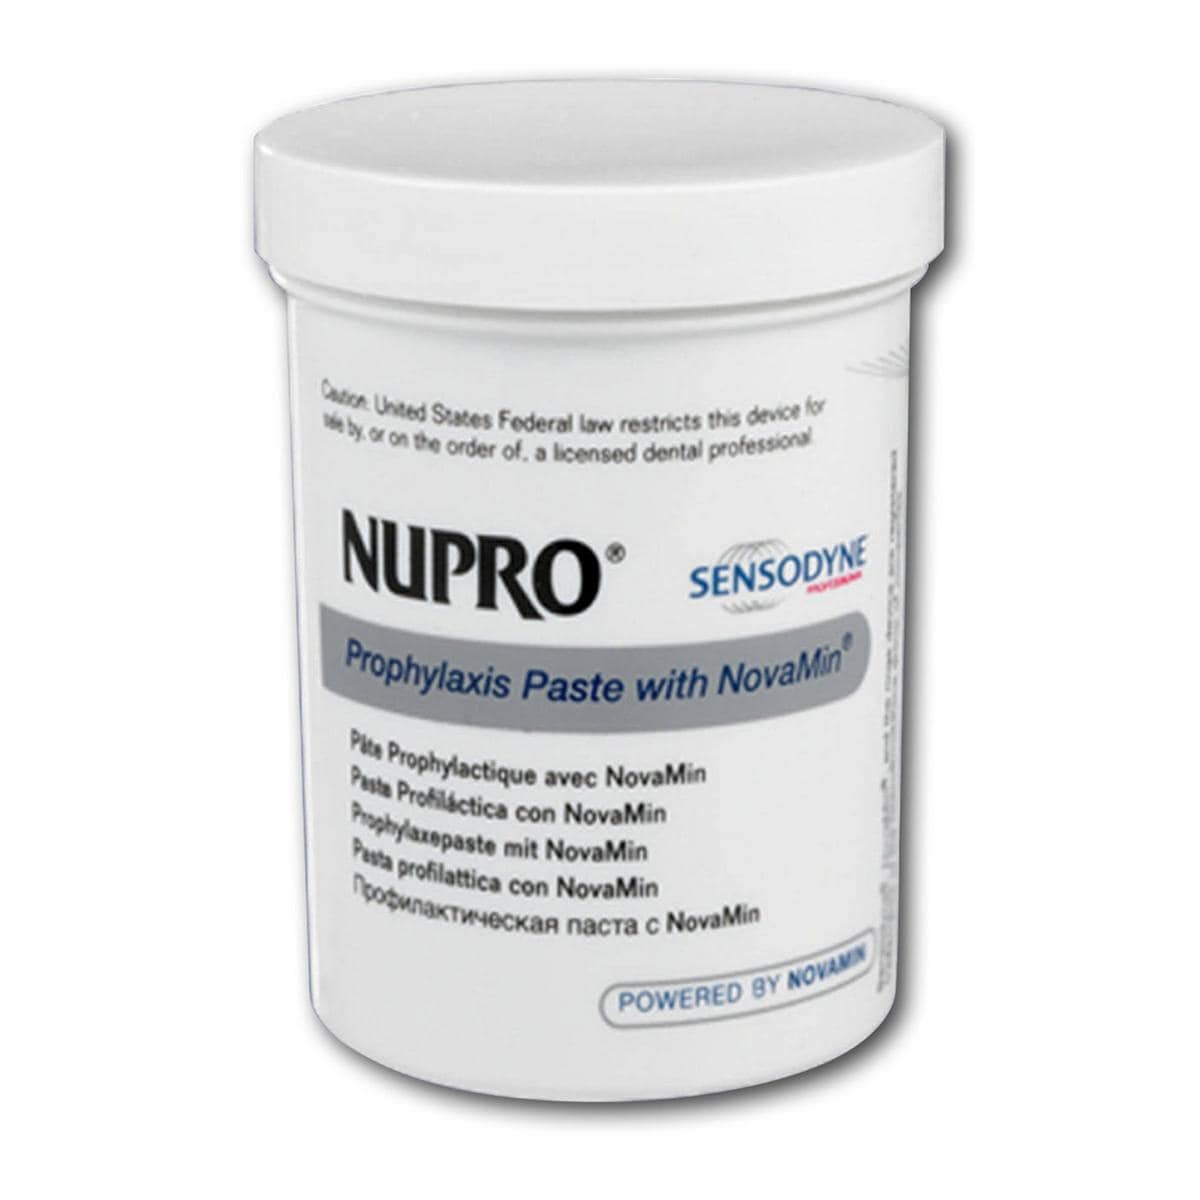 Nupro Sensodyne Prophylaxis paste pot zonder fluoride - Mint, removal